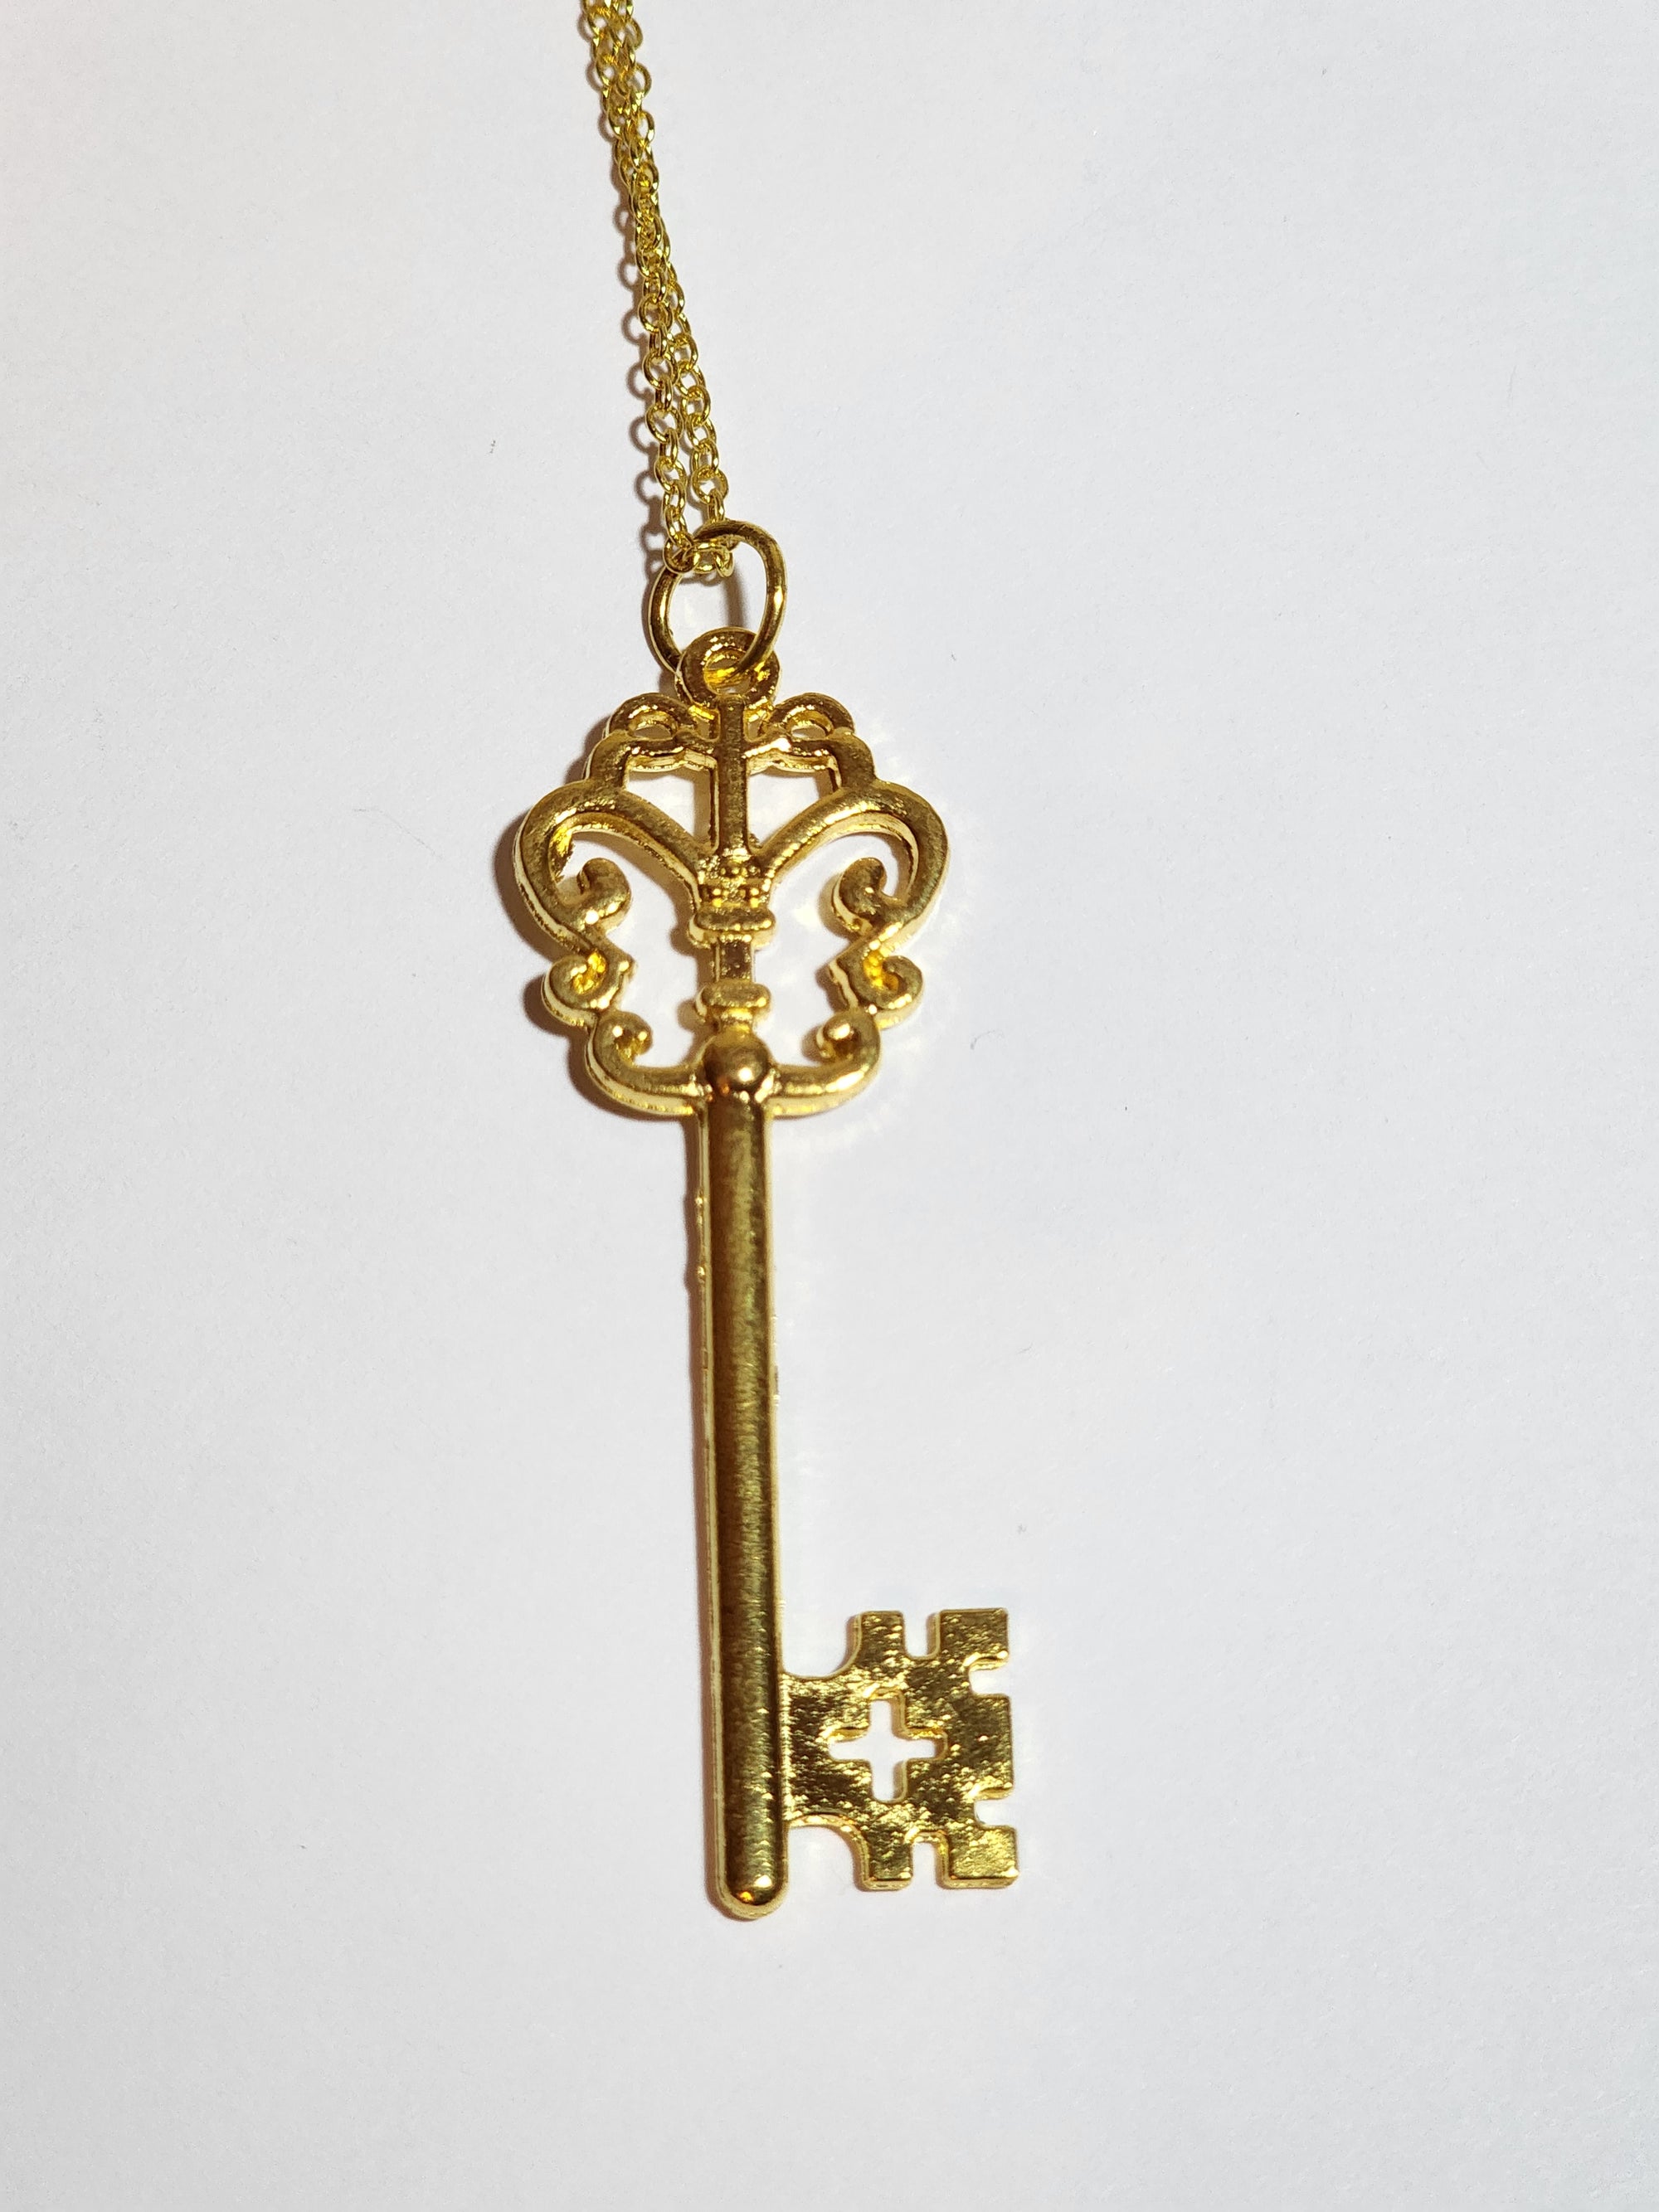 Key necklaces